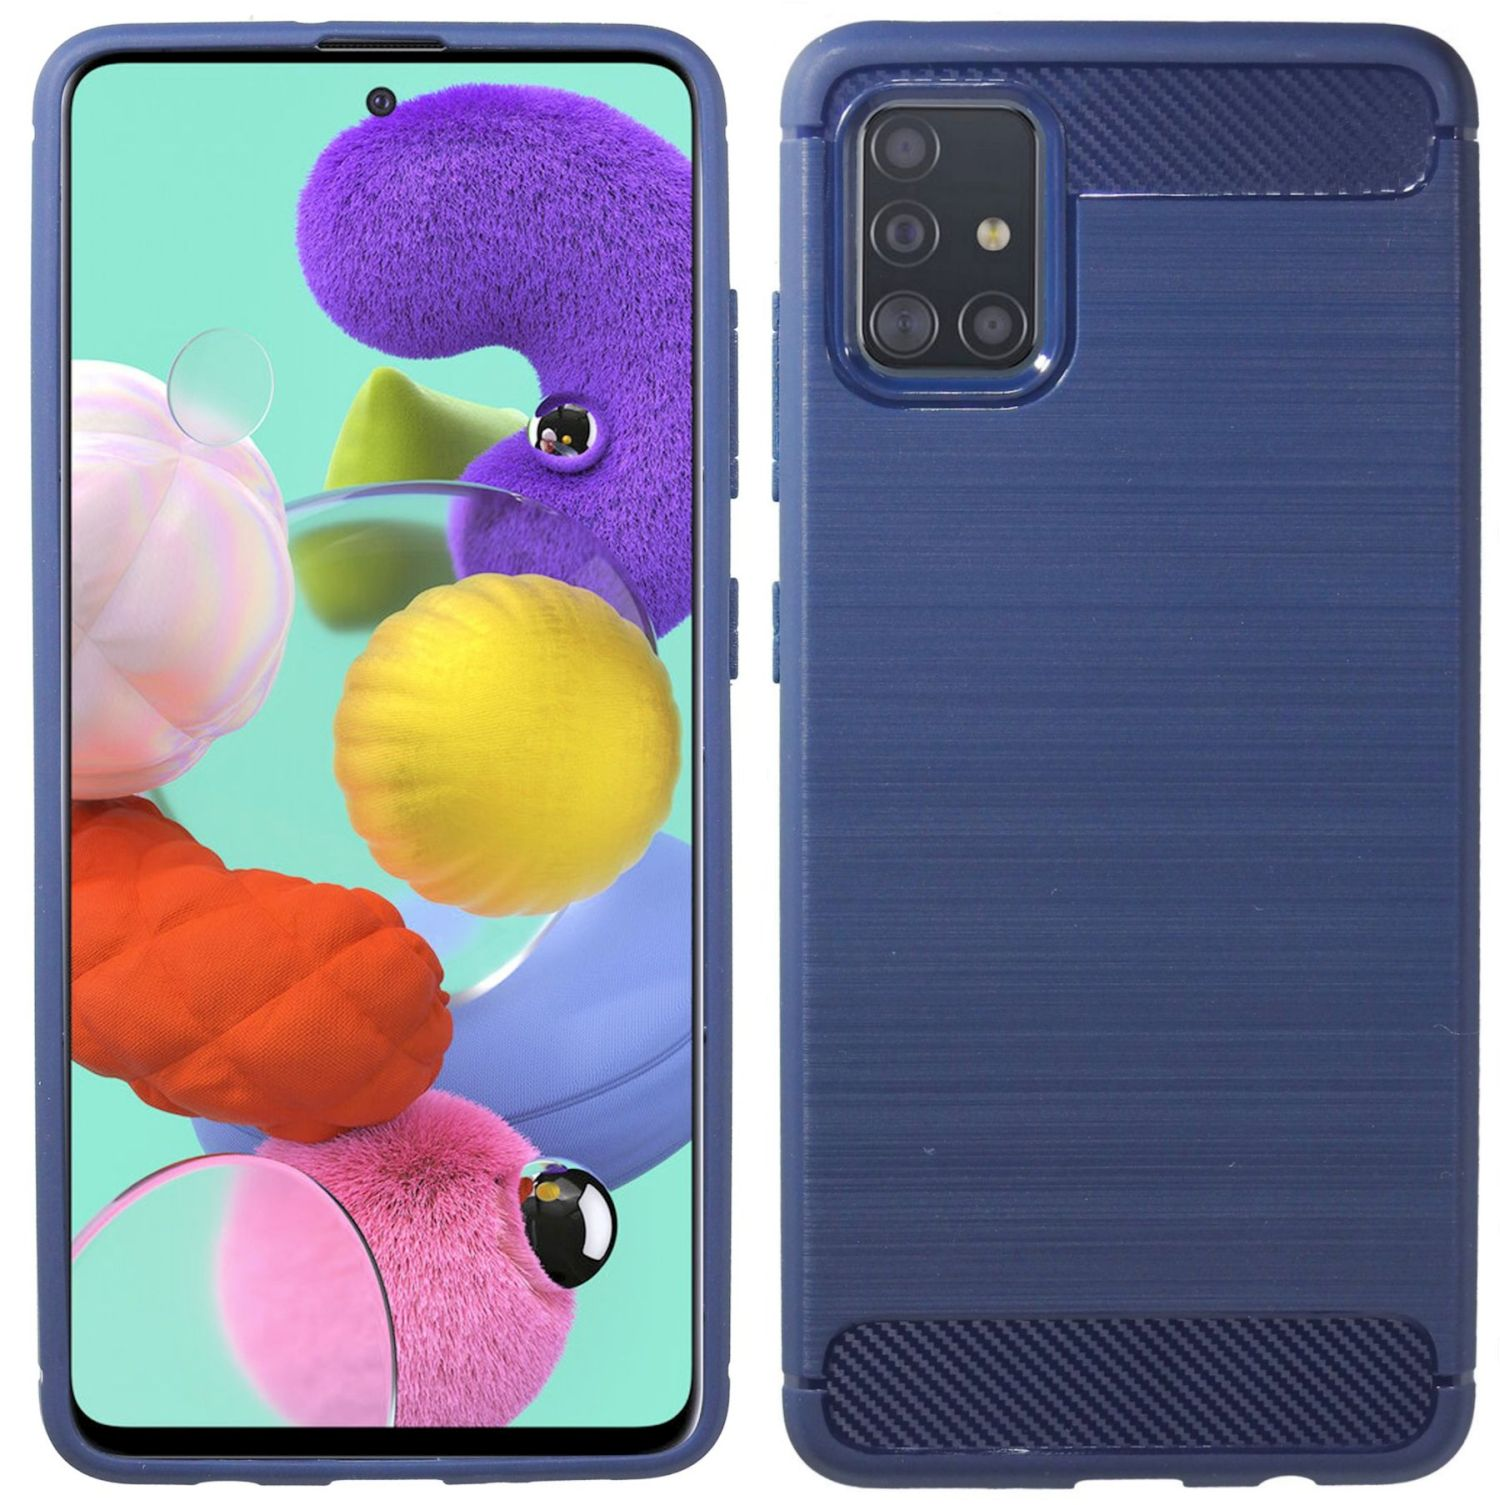 Carbon-Look Bumper, COFI Galaxy Case, Samsung, Blau A51,